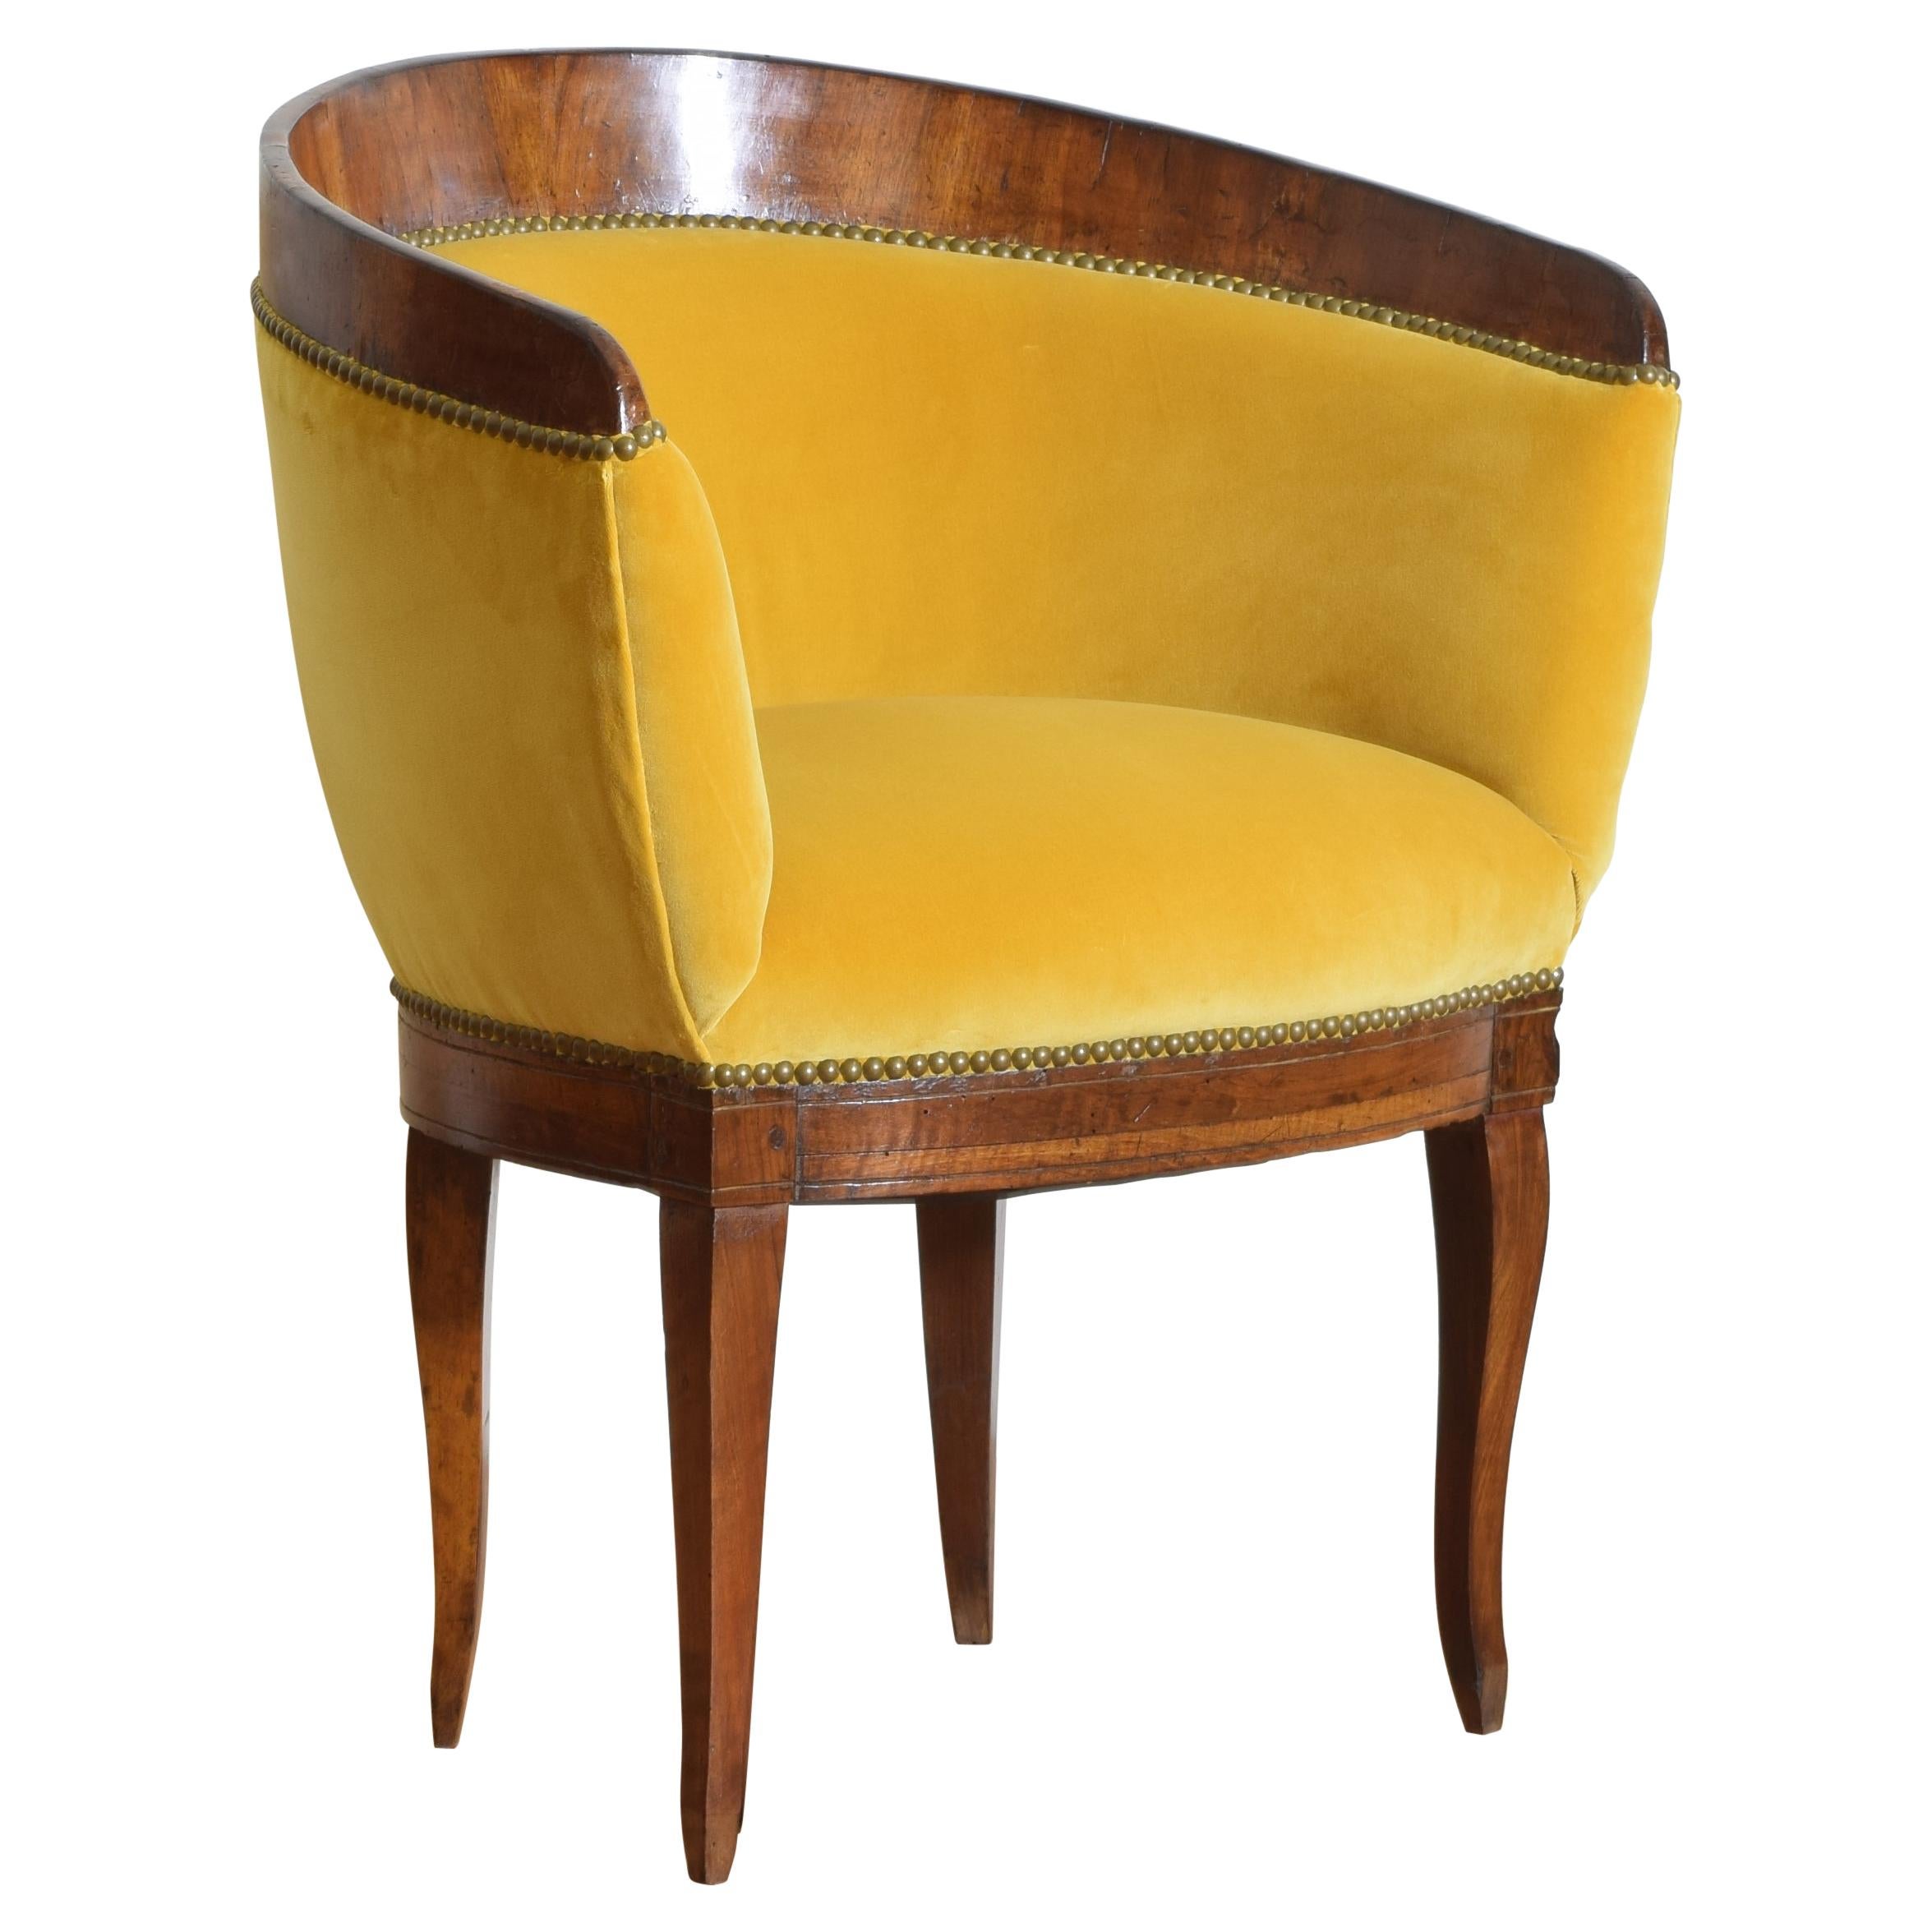 Italian, Veneto, Neoclassic Walnut & Upholstered Barrel Form Chair, early 19thc